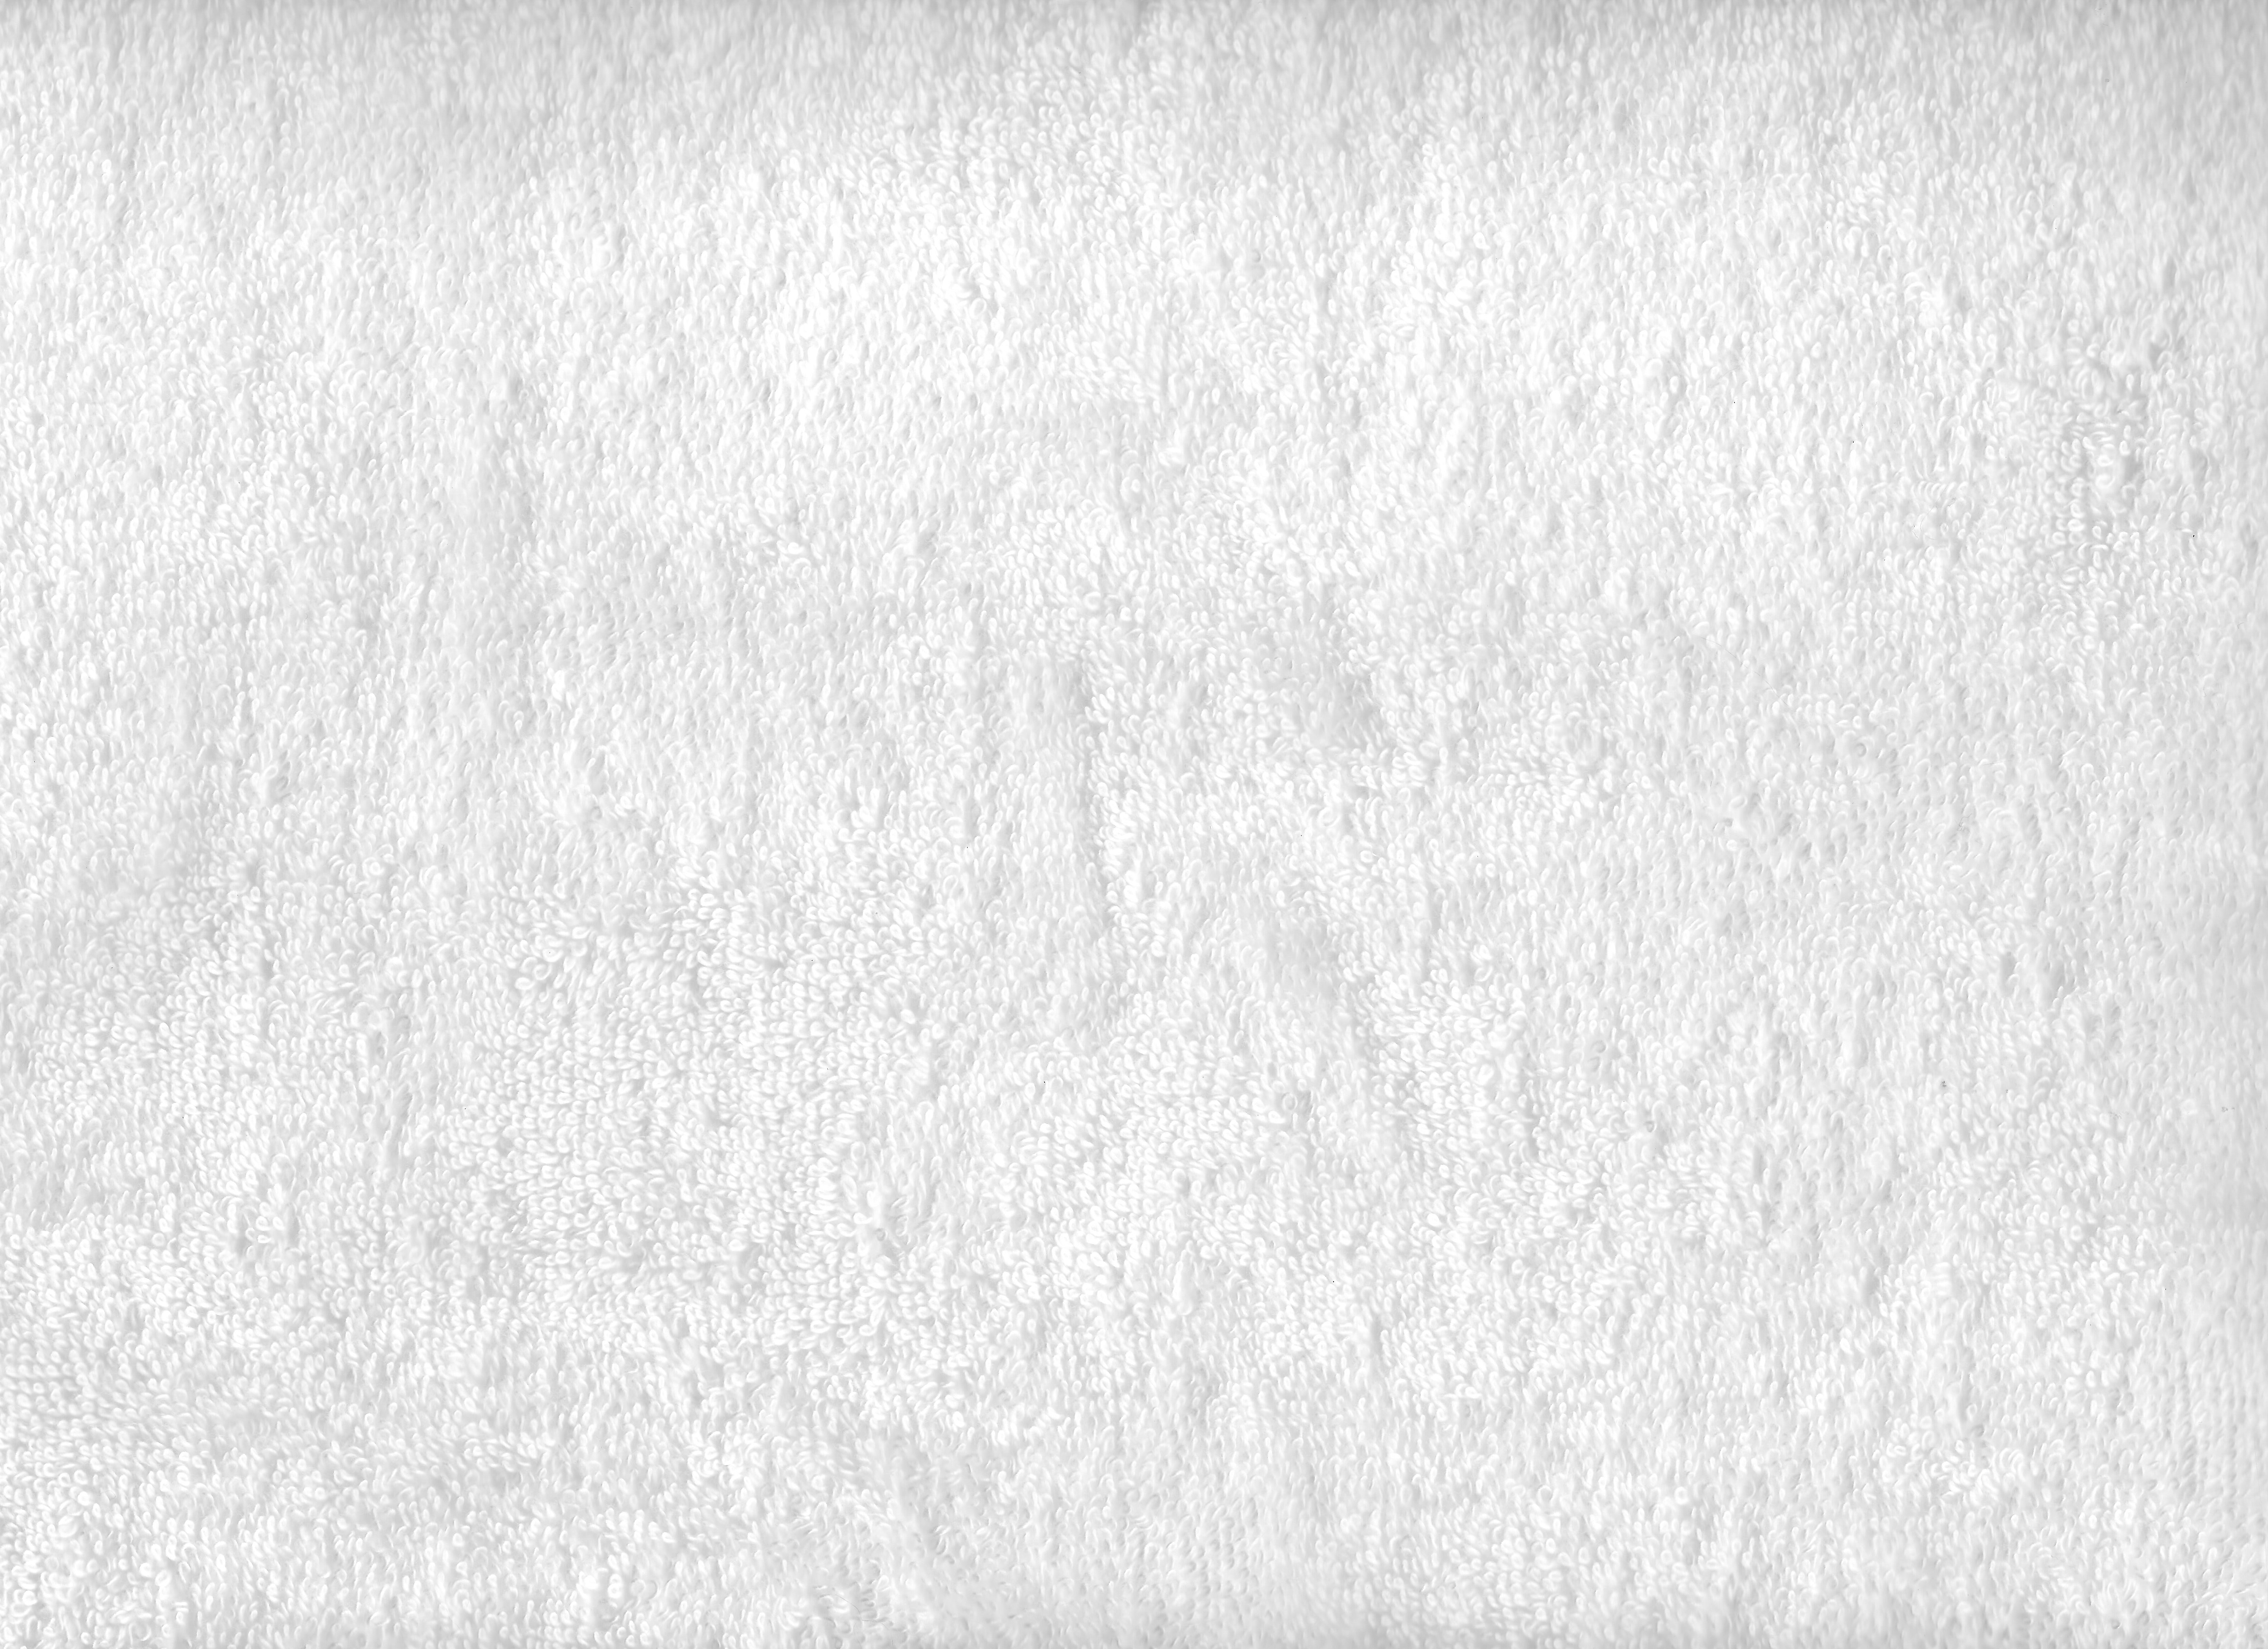 https://www.photos-public-domain.com/wp-content/uploads/2017/12/white-terry-cloth-towel-texture.jpg